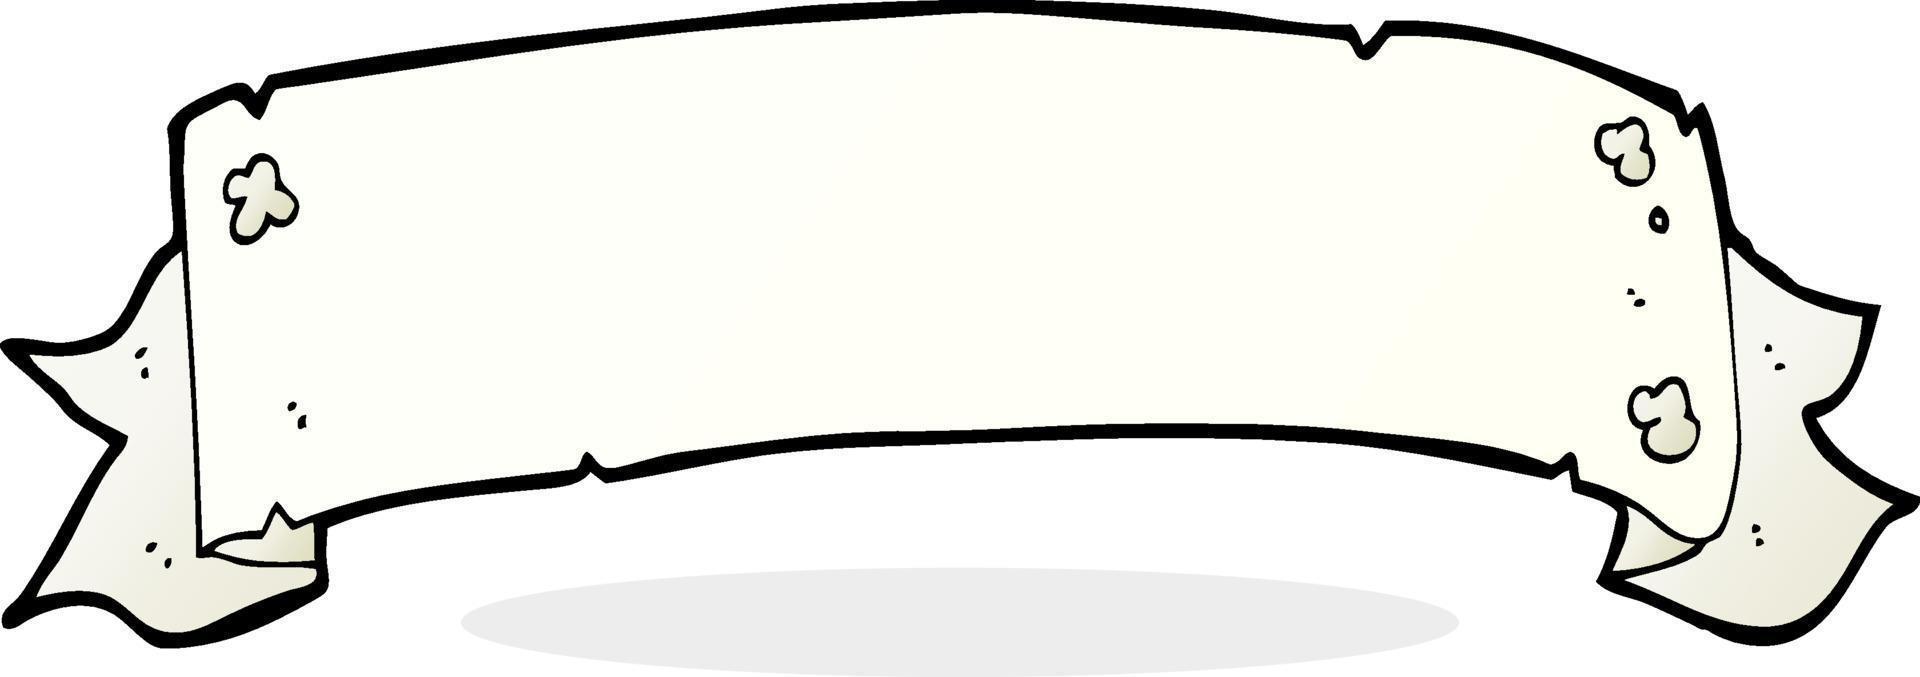 heraldik skrolla baner tecknad serie vektor